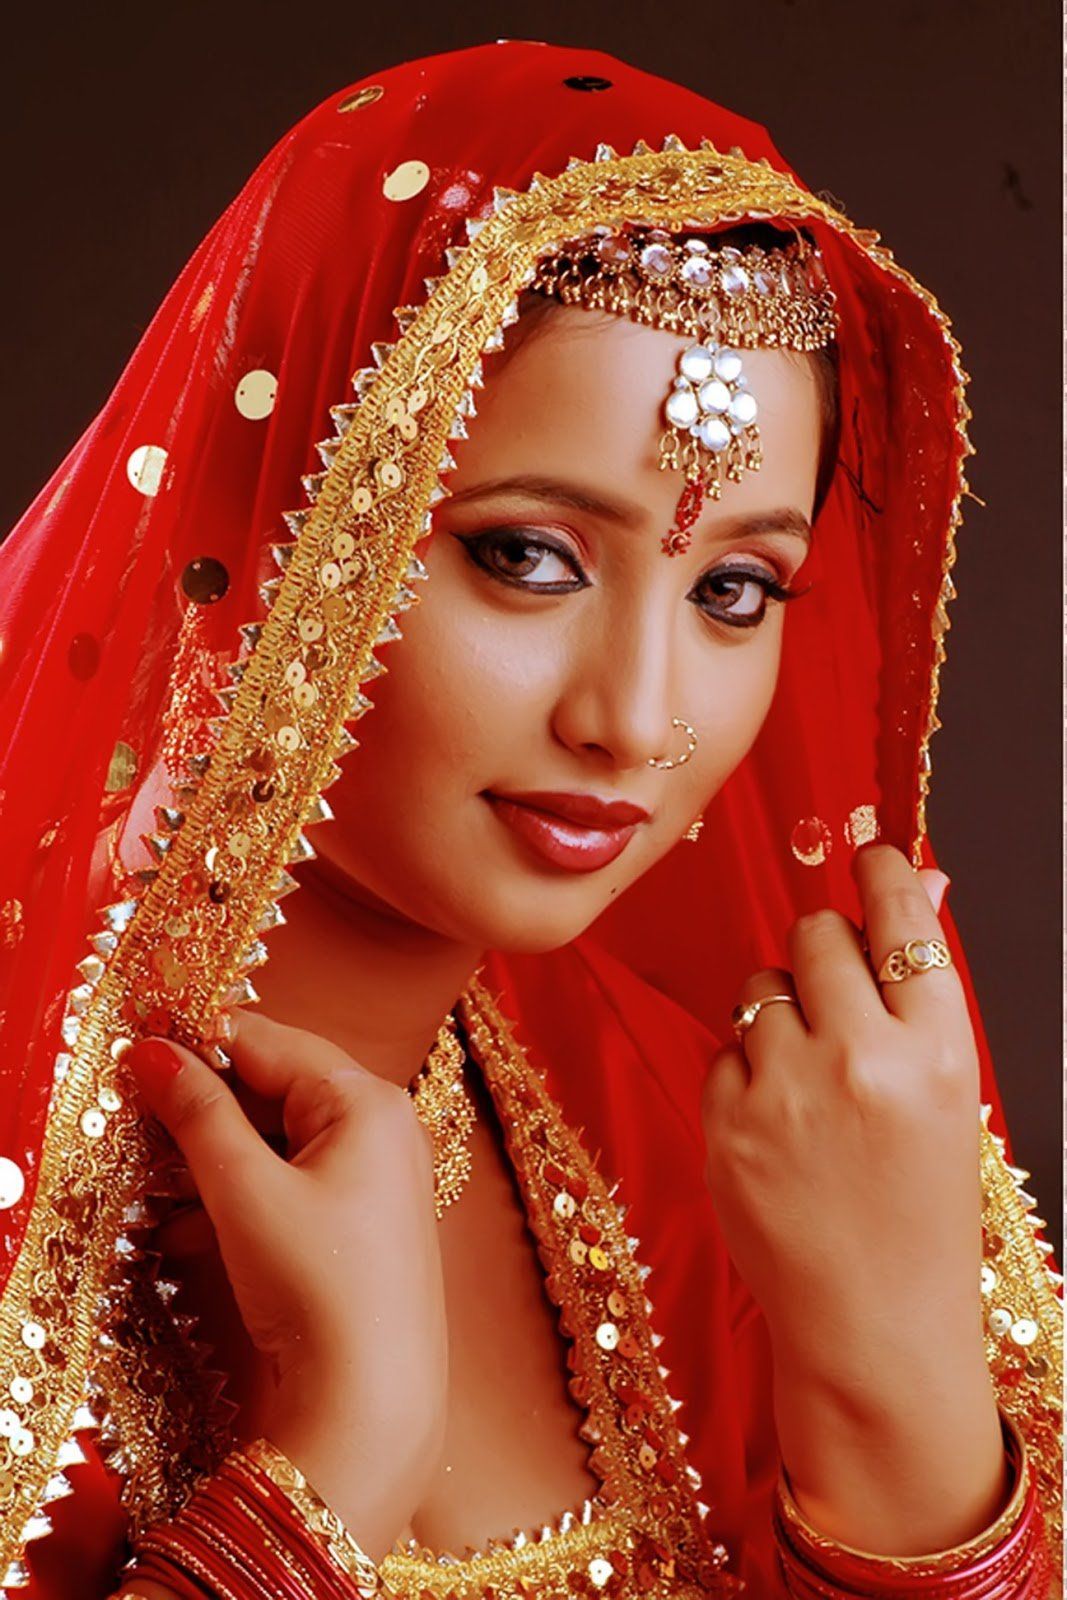 No 1 Bhojpuri Heroine Rani chatterjee profile, HD Wallpaper, Photo, Image, Pics. जोगीरा